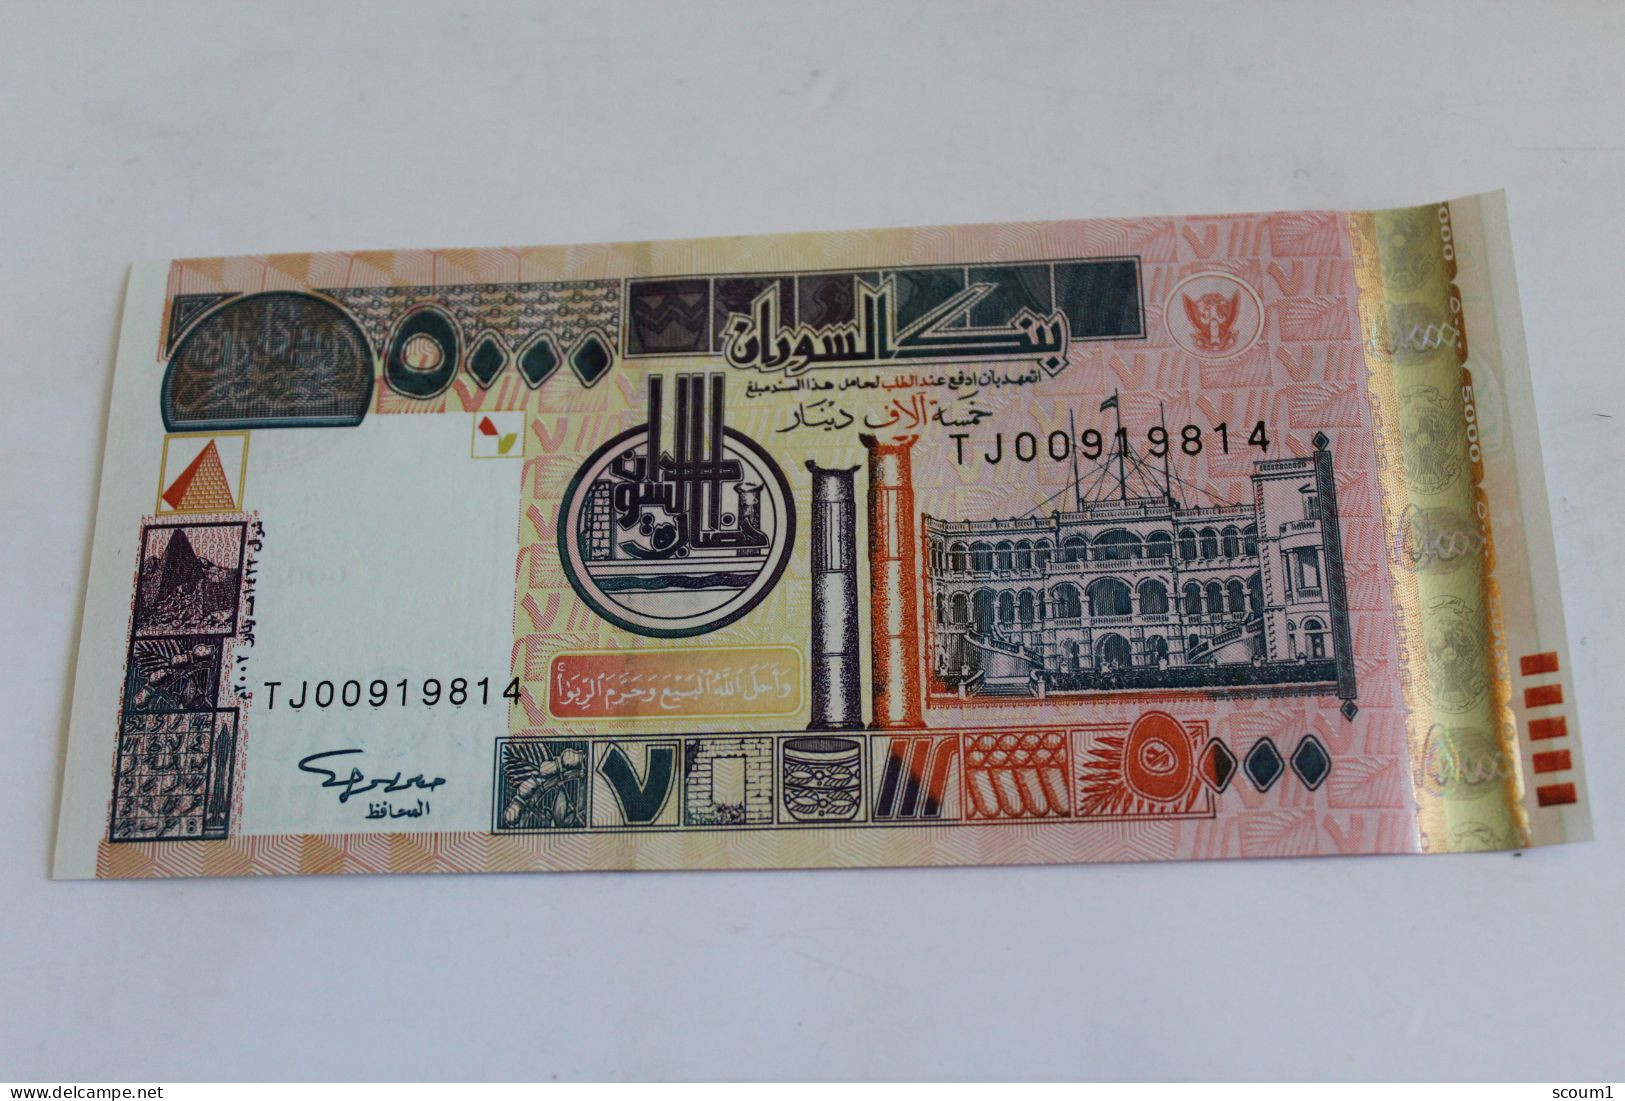 BANK OF SOUDAN 5000 Dinards - Soudan